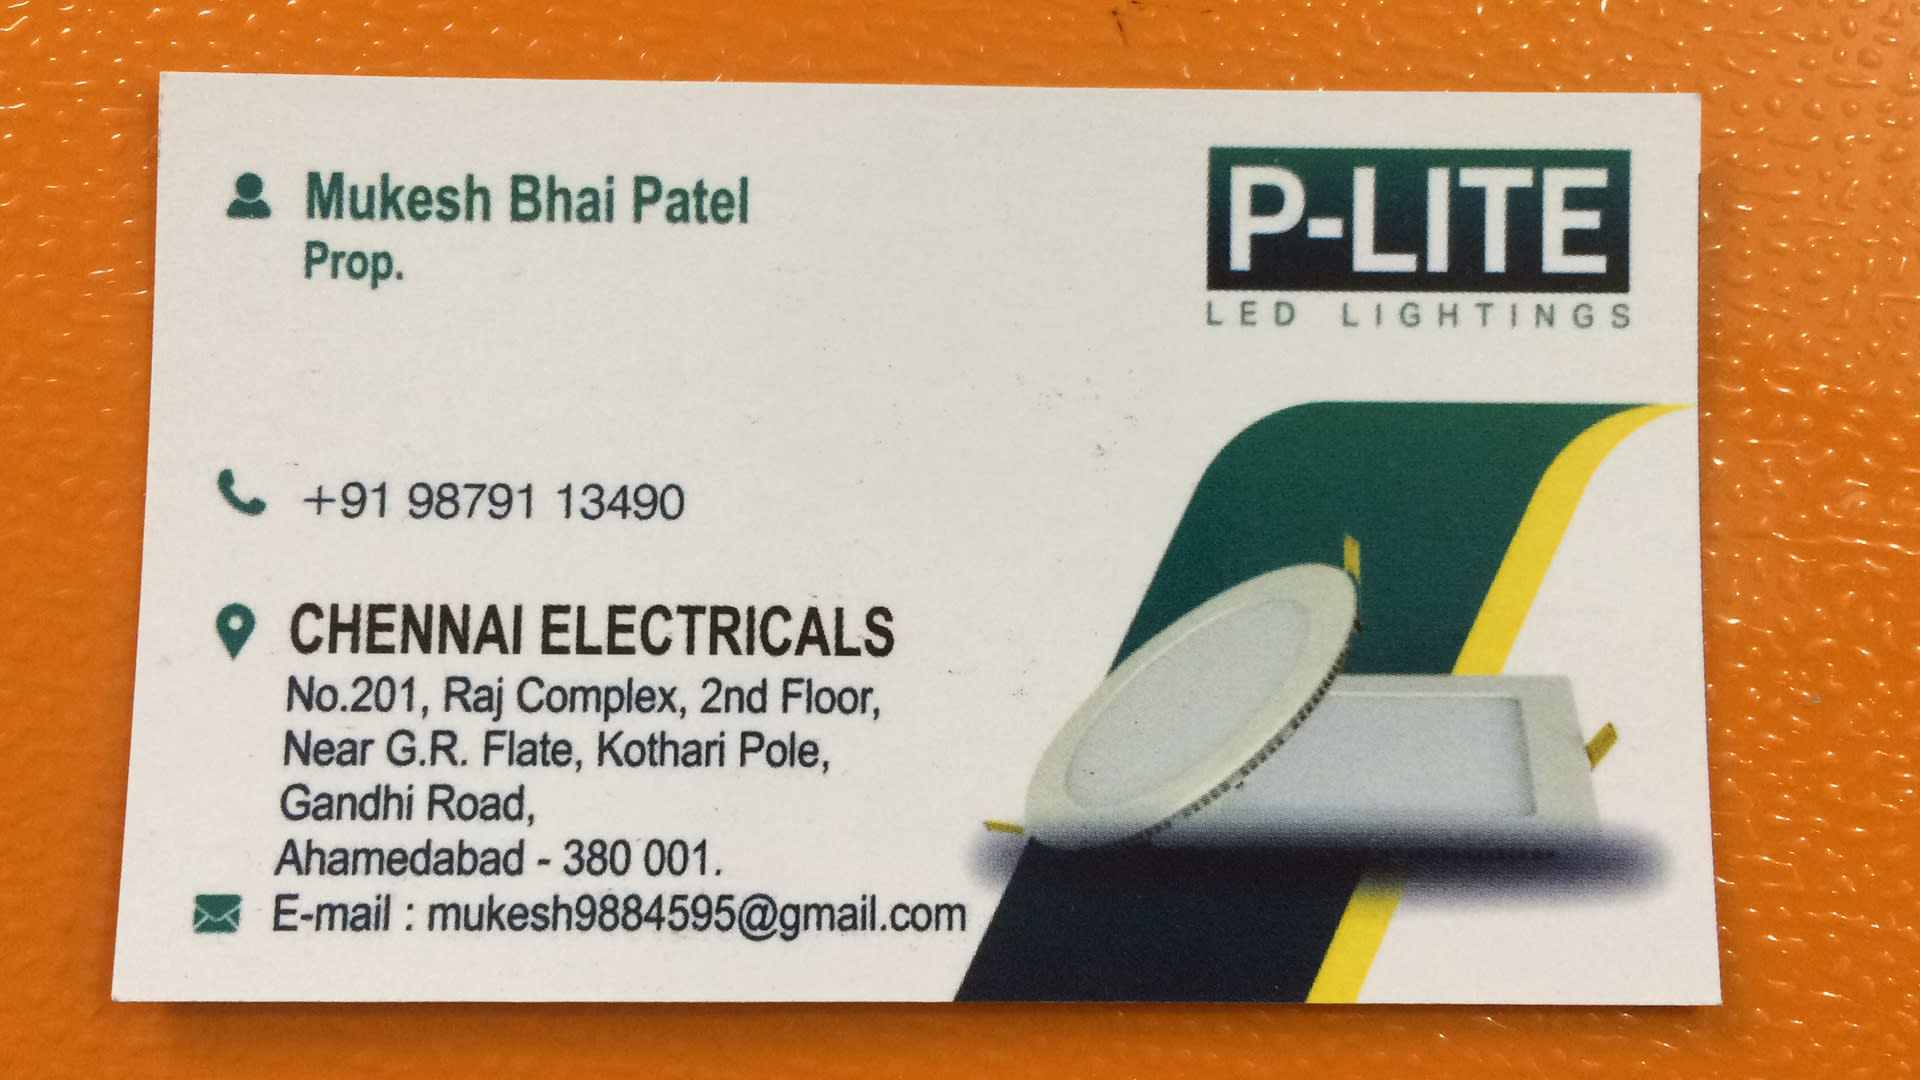 Chennai Electricals